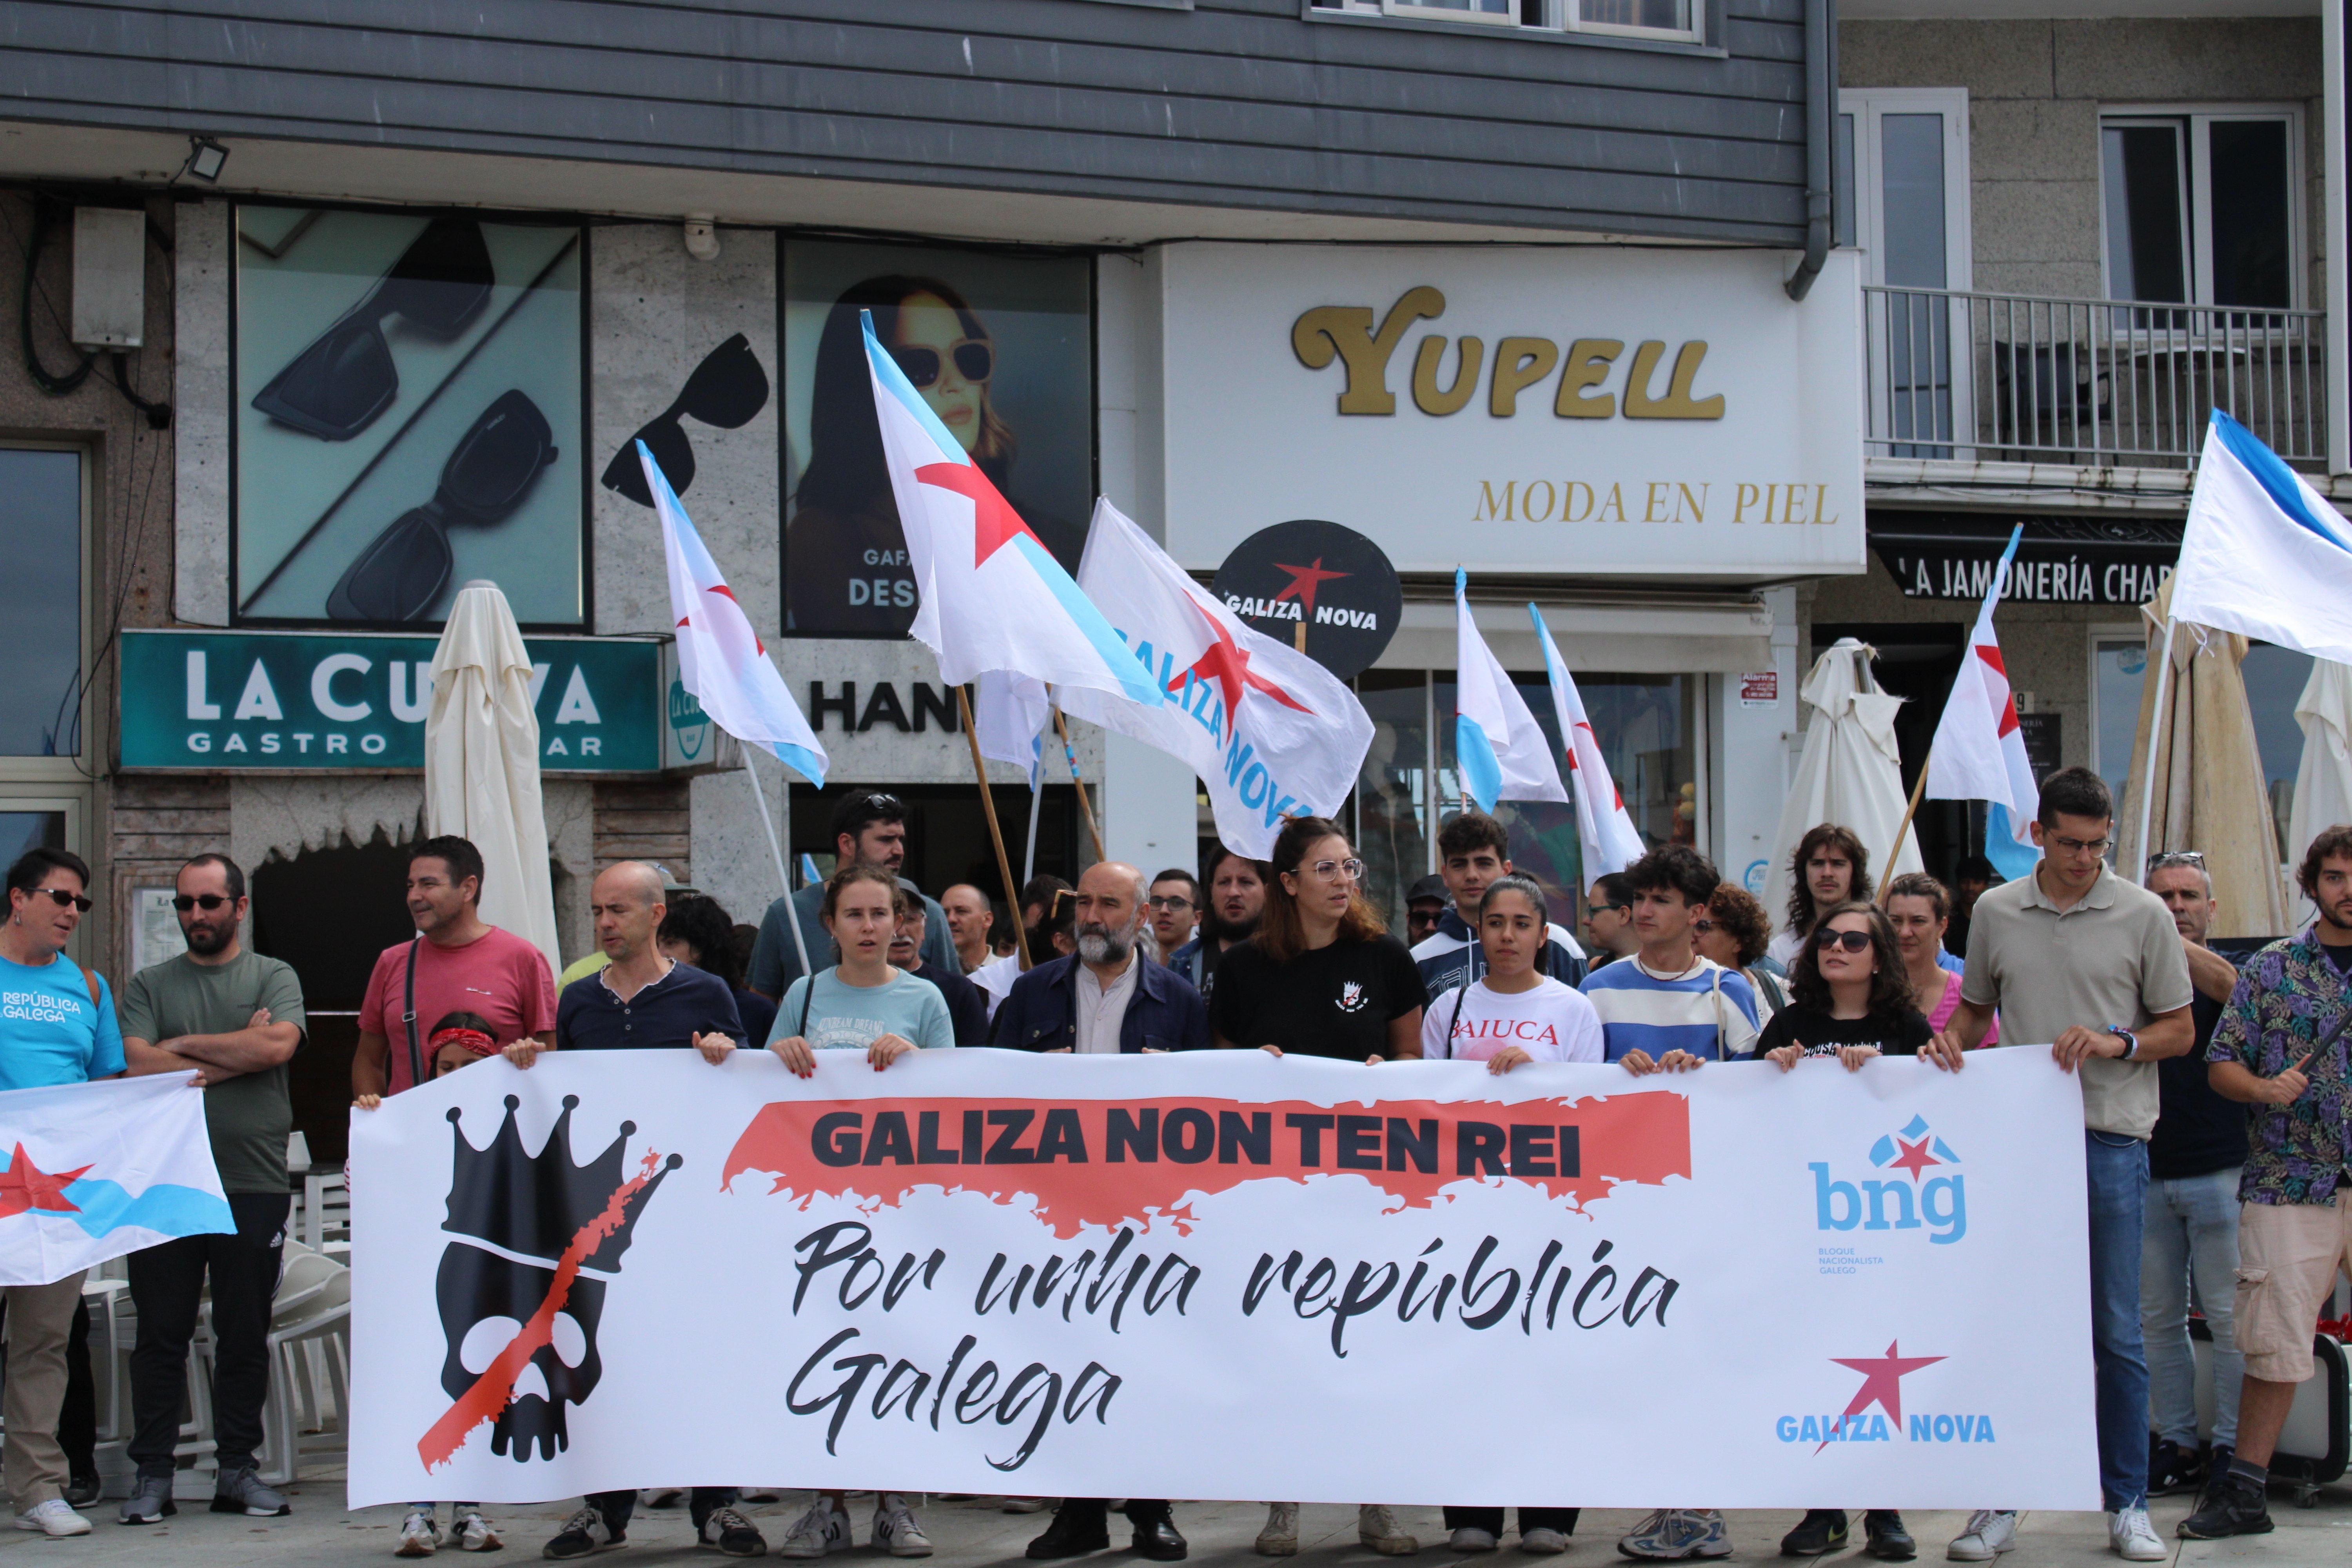 Protesta a Sanxenxo per la visita de Joan Carles I: "Galícia no té rei"